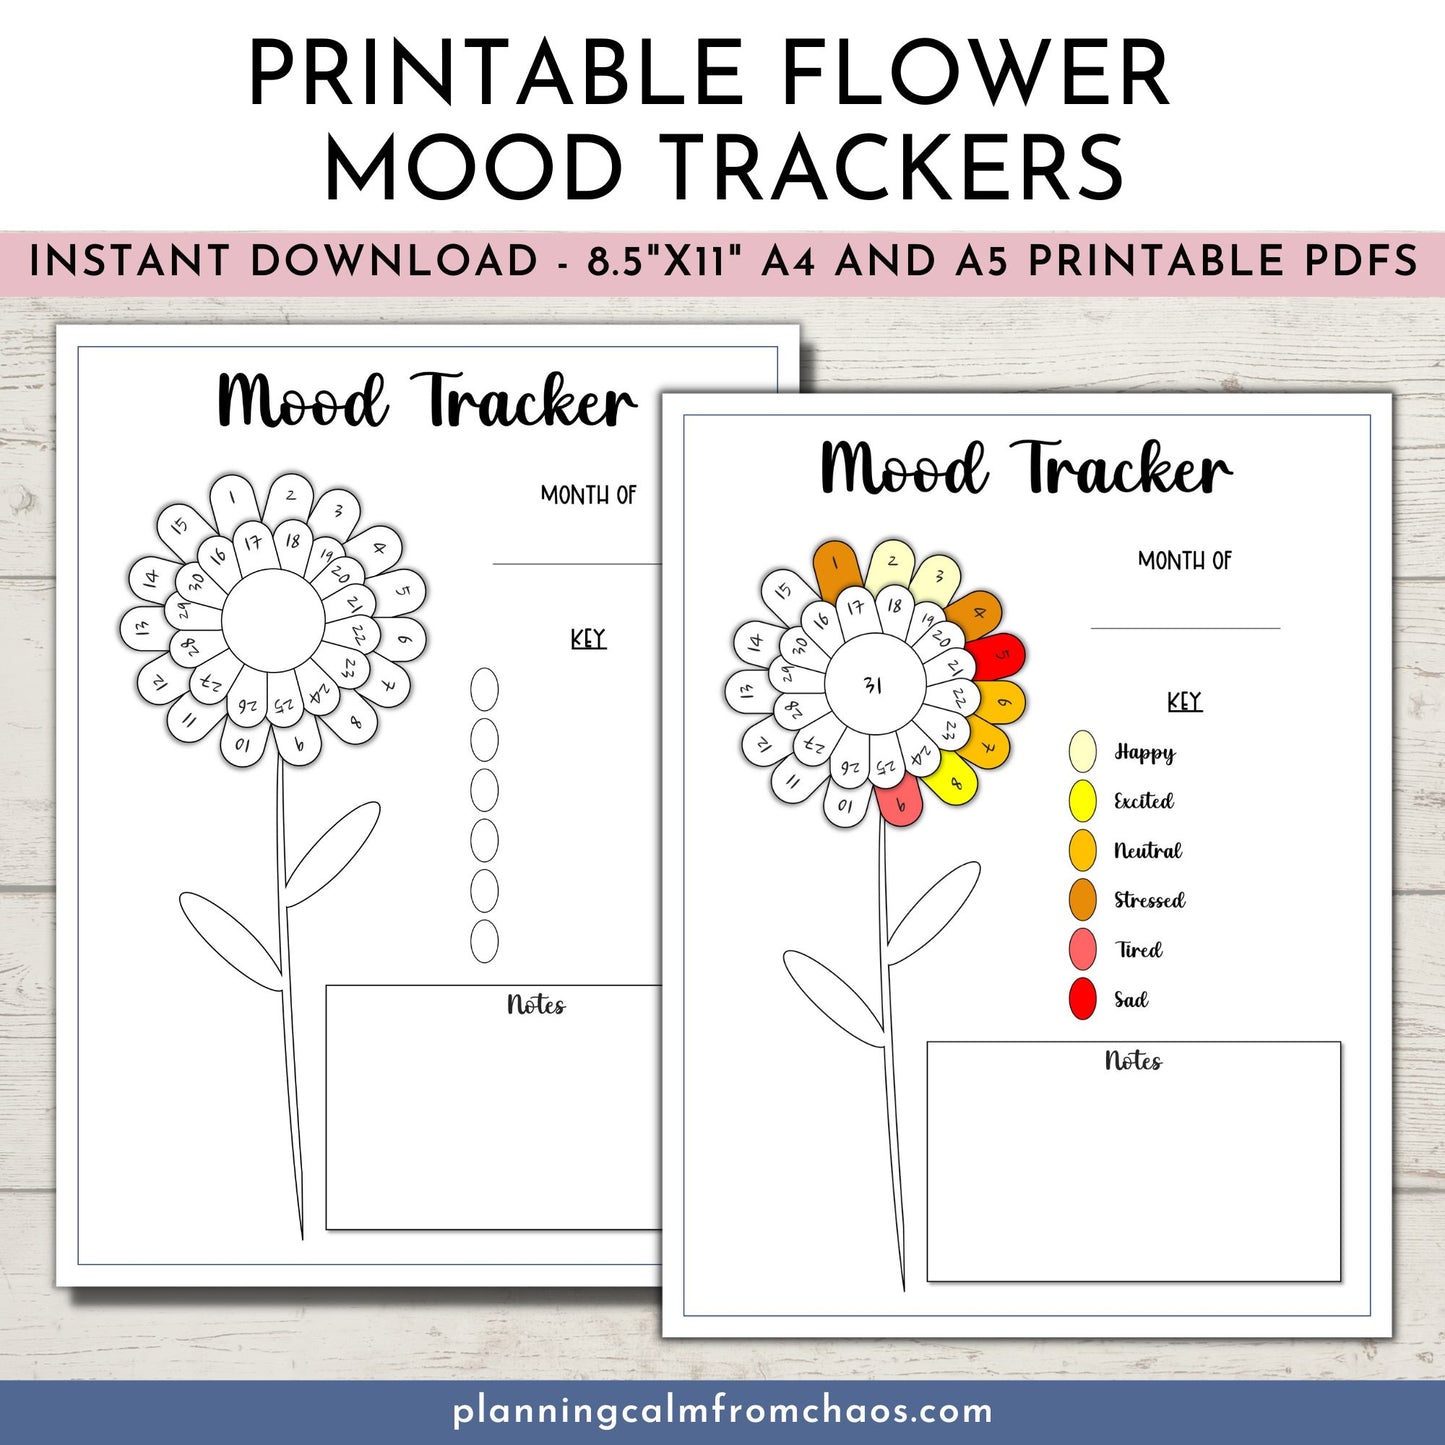 printable flower mood tracker